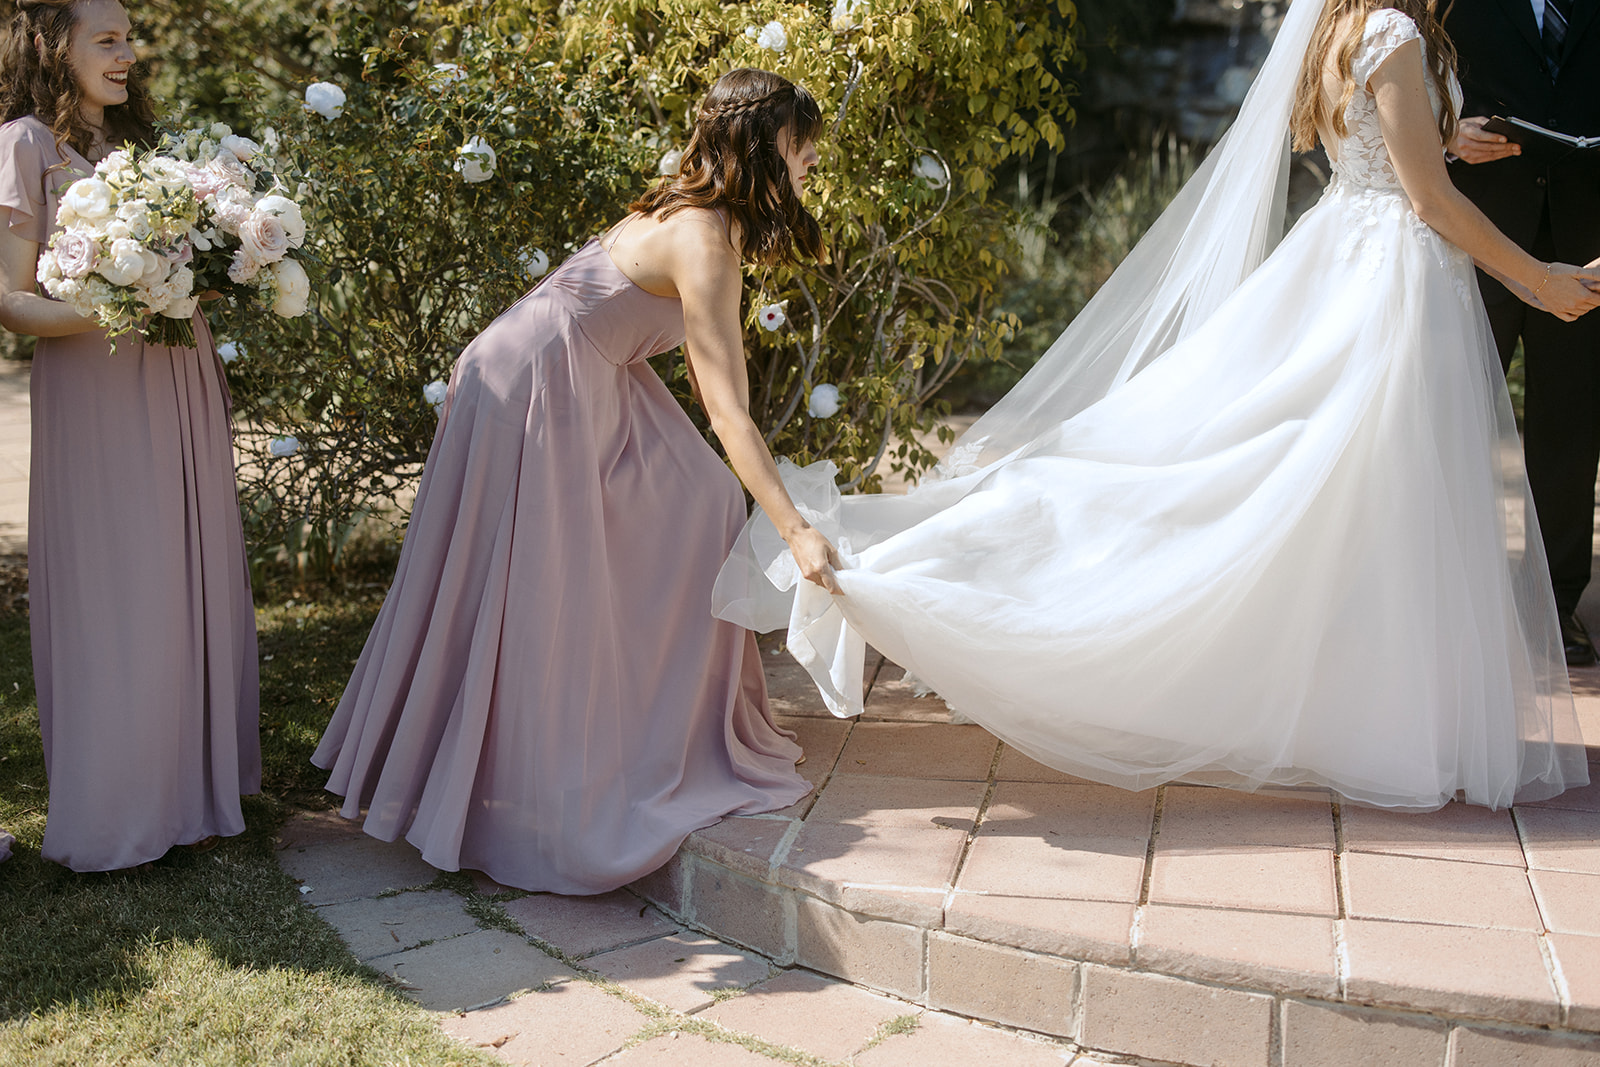 Bridesmaid fluffing bride's dress during wedding ceremony at La Arboleda in California